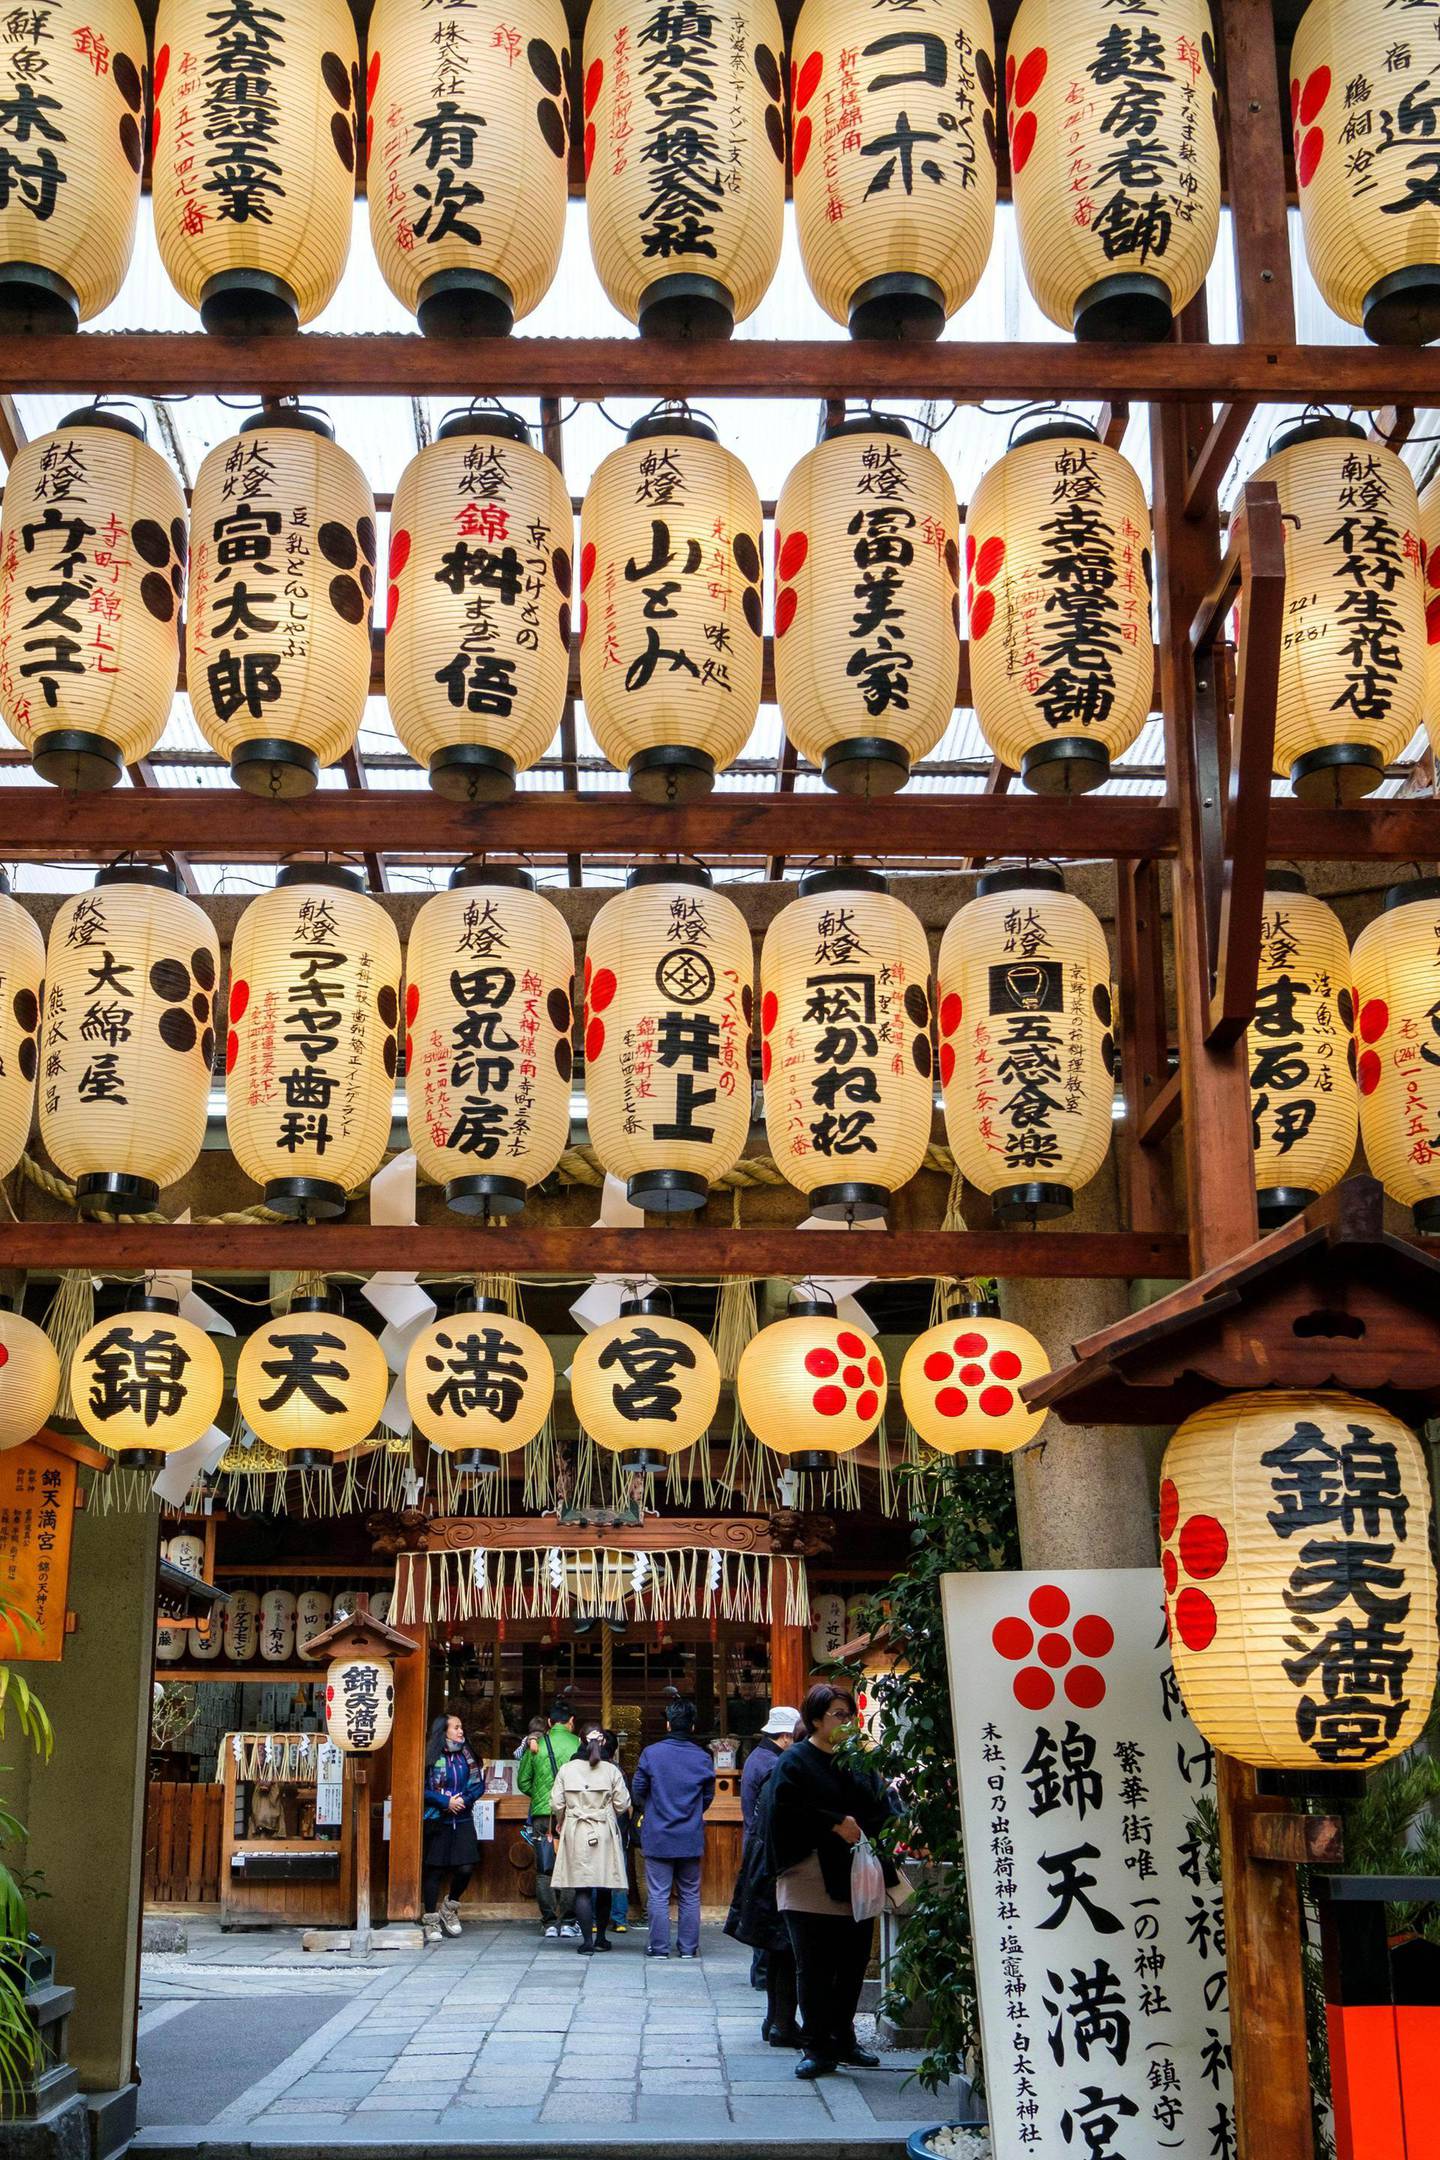 M0M6NY Japan,Honshu island,Kansai region,Kyoto,Nishiki market,a small temple. Hemis / Alamy Stock Photo